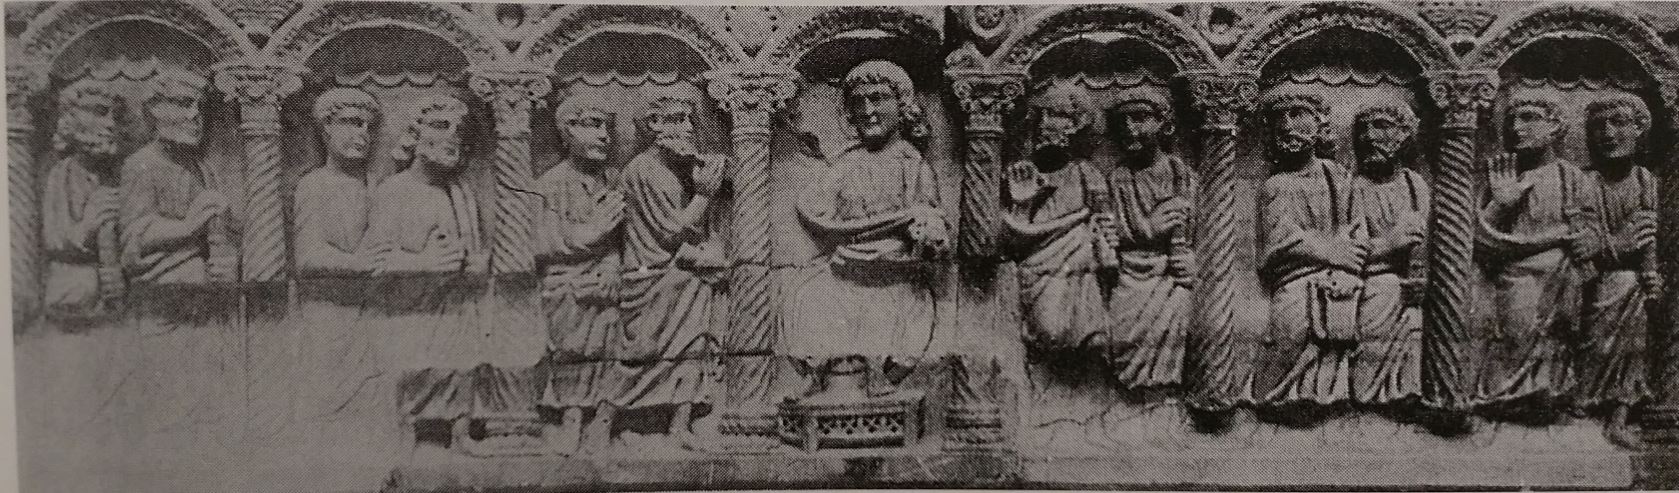 Arles sarcophage N° 38 vers 350 Mauro della valle fig 19